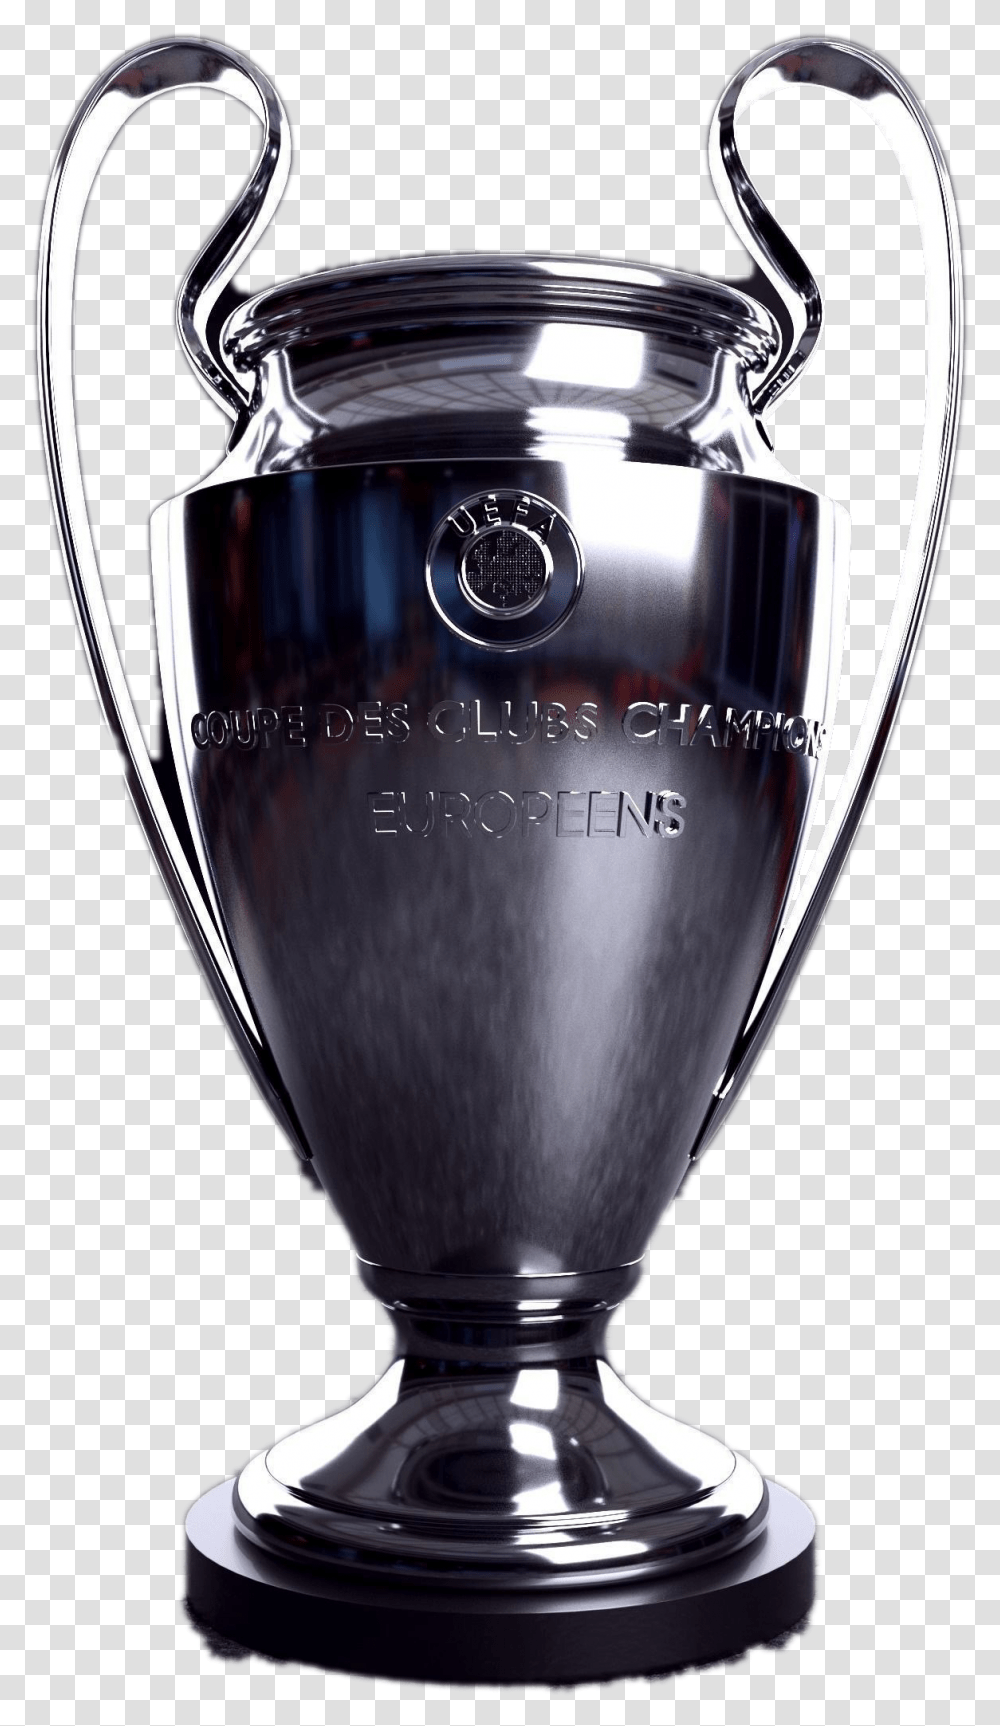 Uefa Champions League Trophy Background Image Uefa Champions League Trophy, Mixer, Appliance Transparent Png